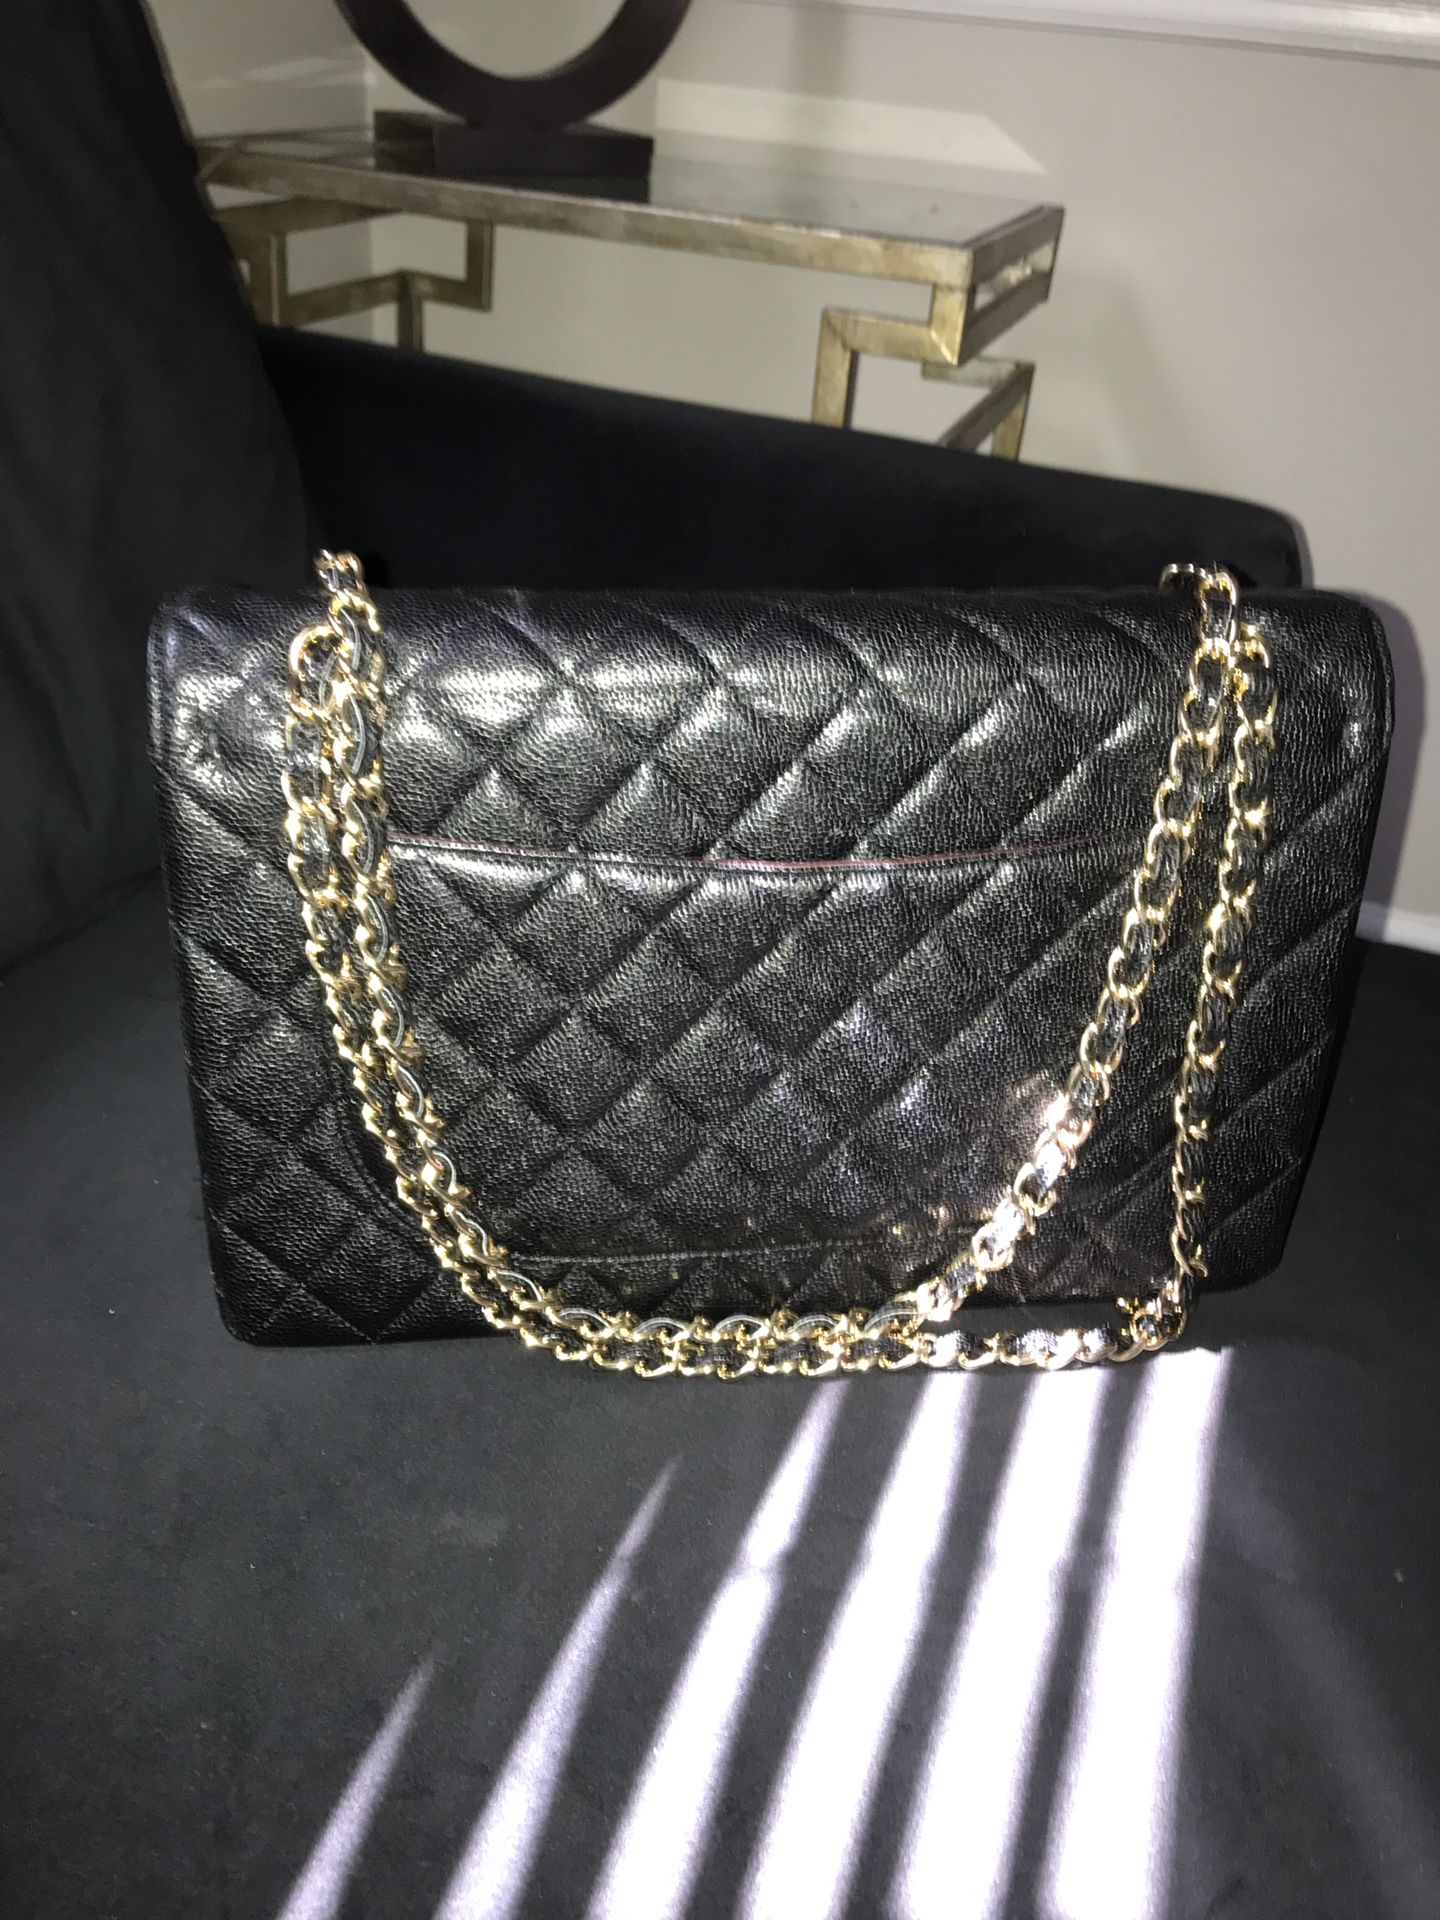 Black Caviar leather flap handbag. With box and duster bag